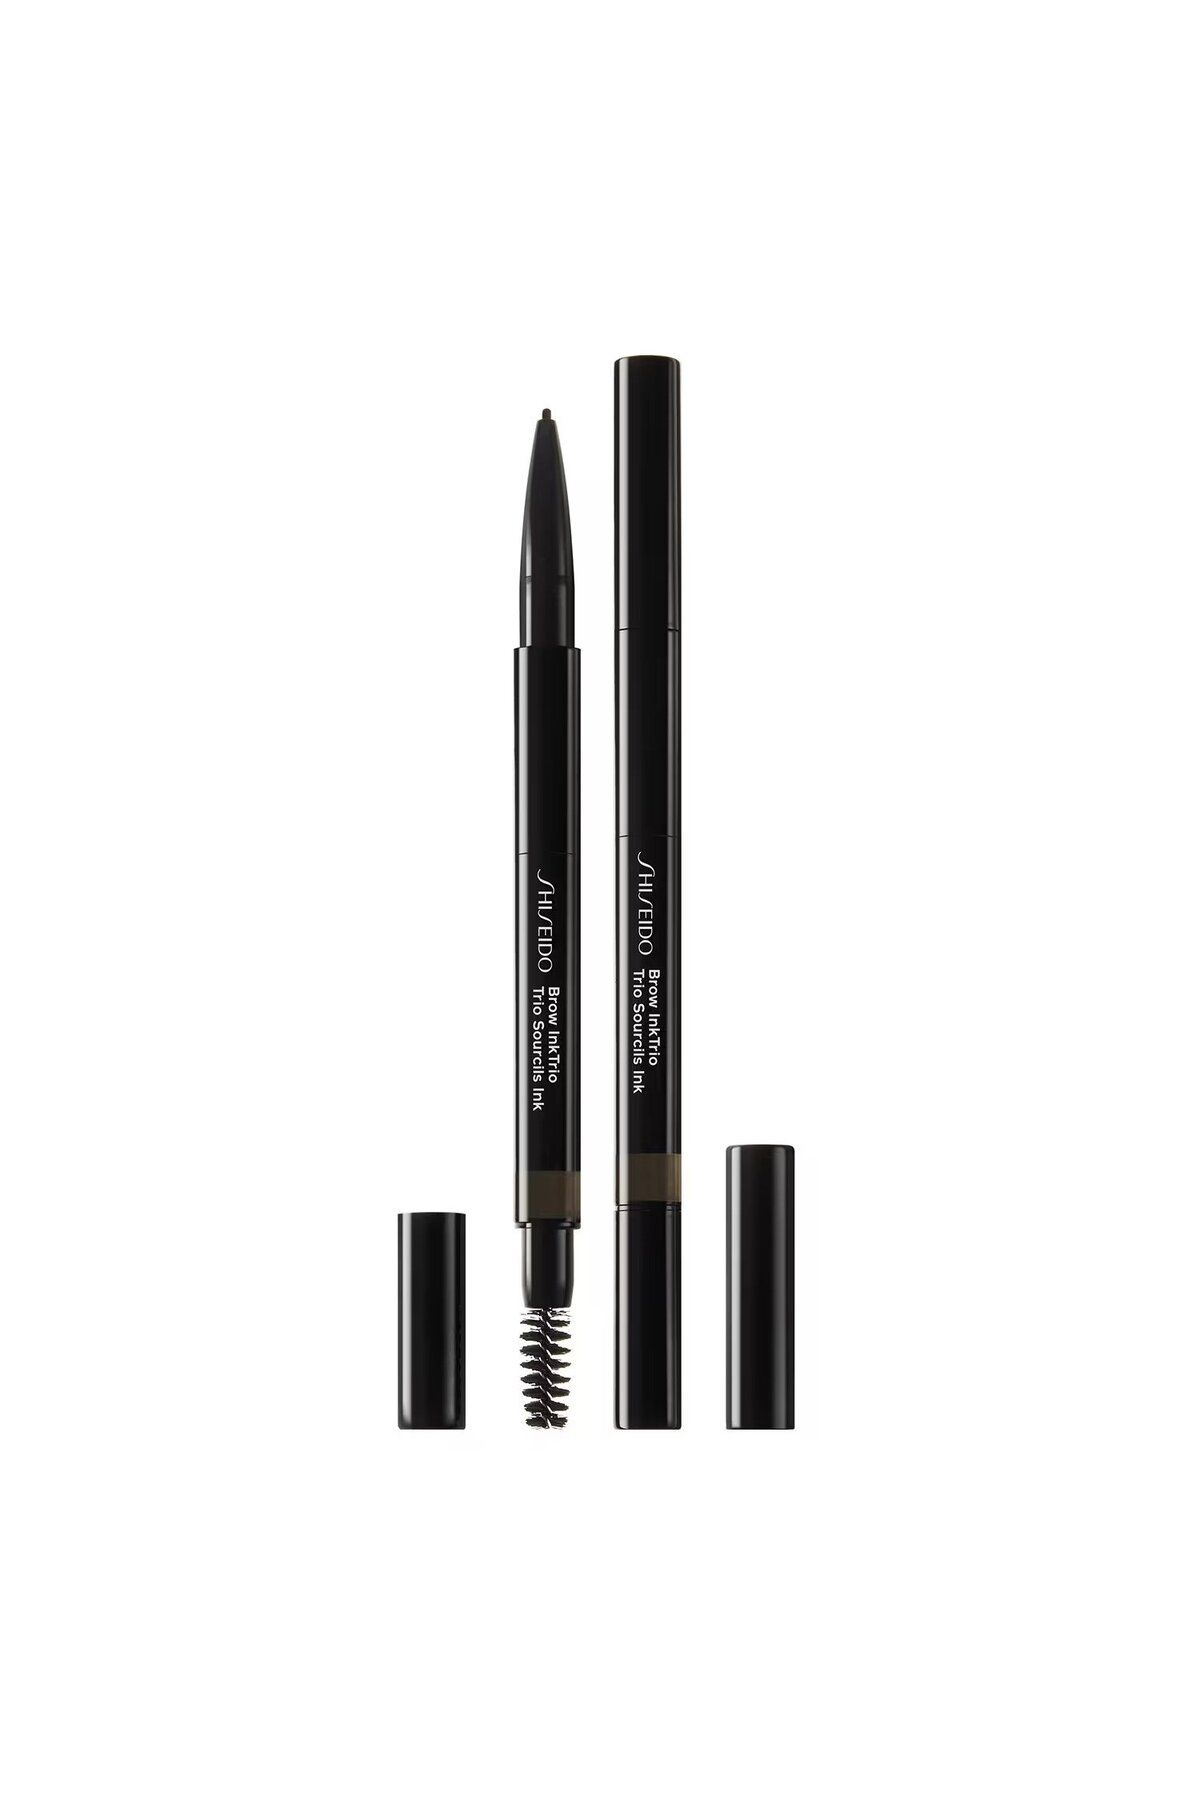 Shiseido مداد ابرو مدل 04 پر کردن و شکل دادن به ابروها با مداد ابرویی 3 در یک